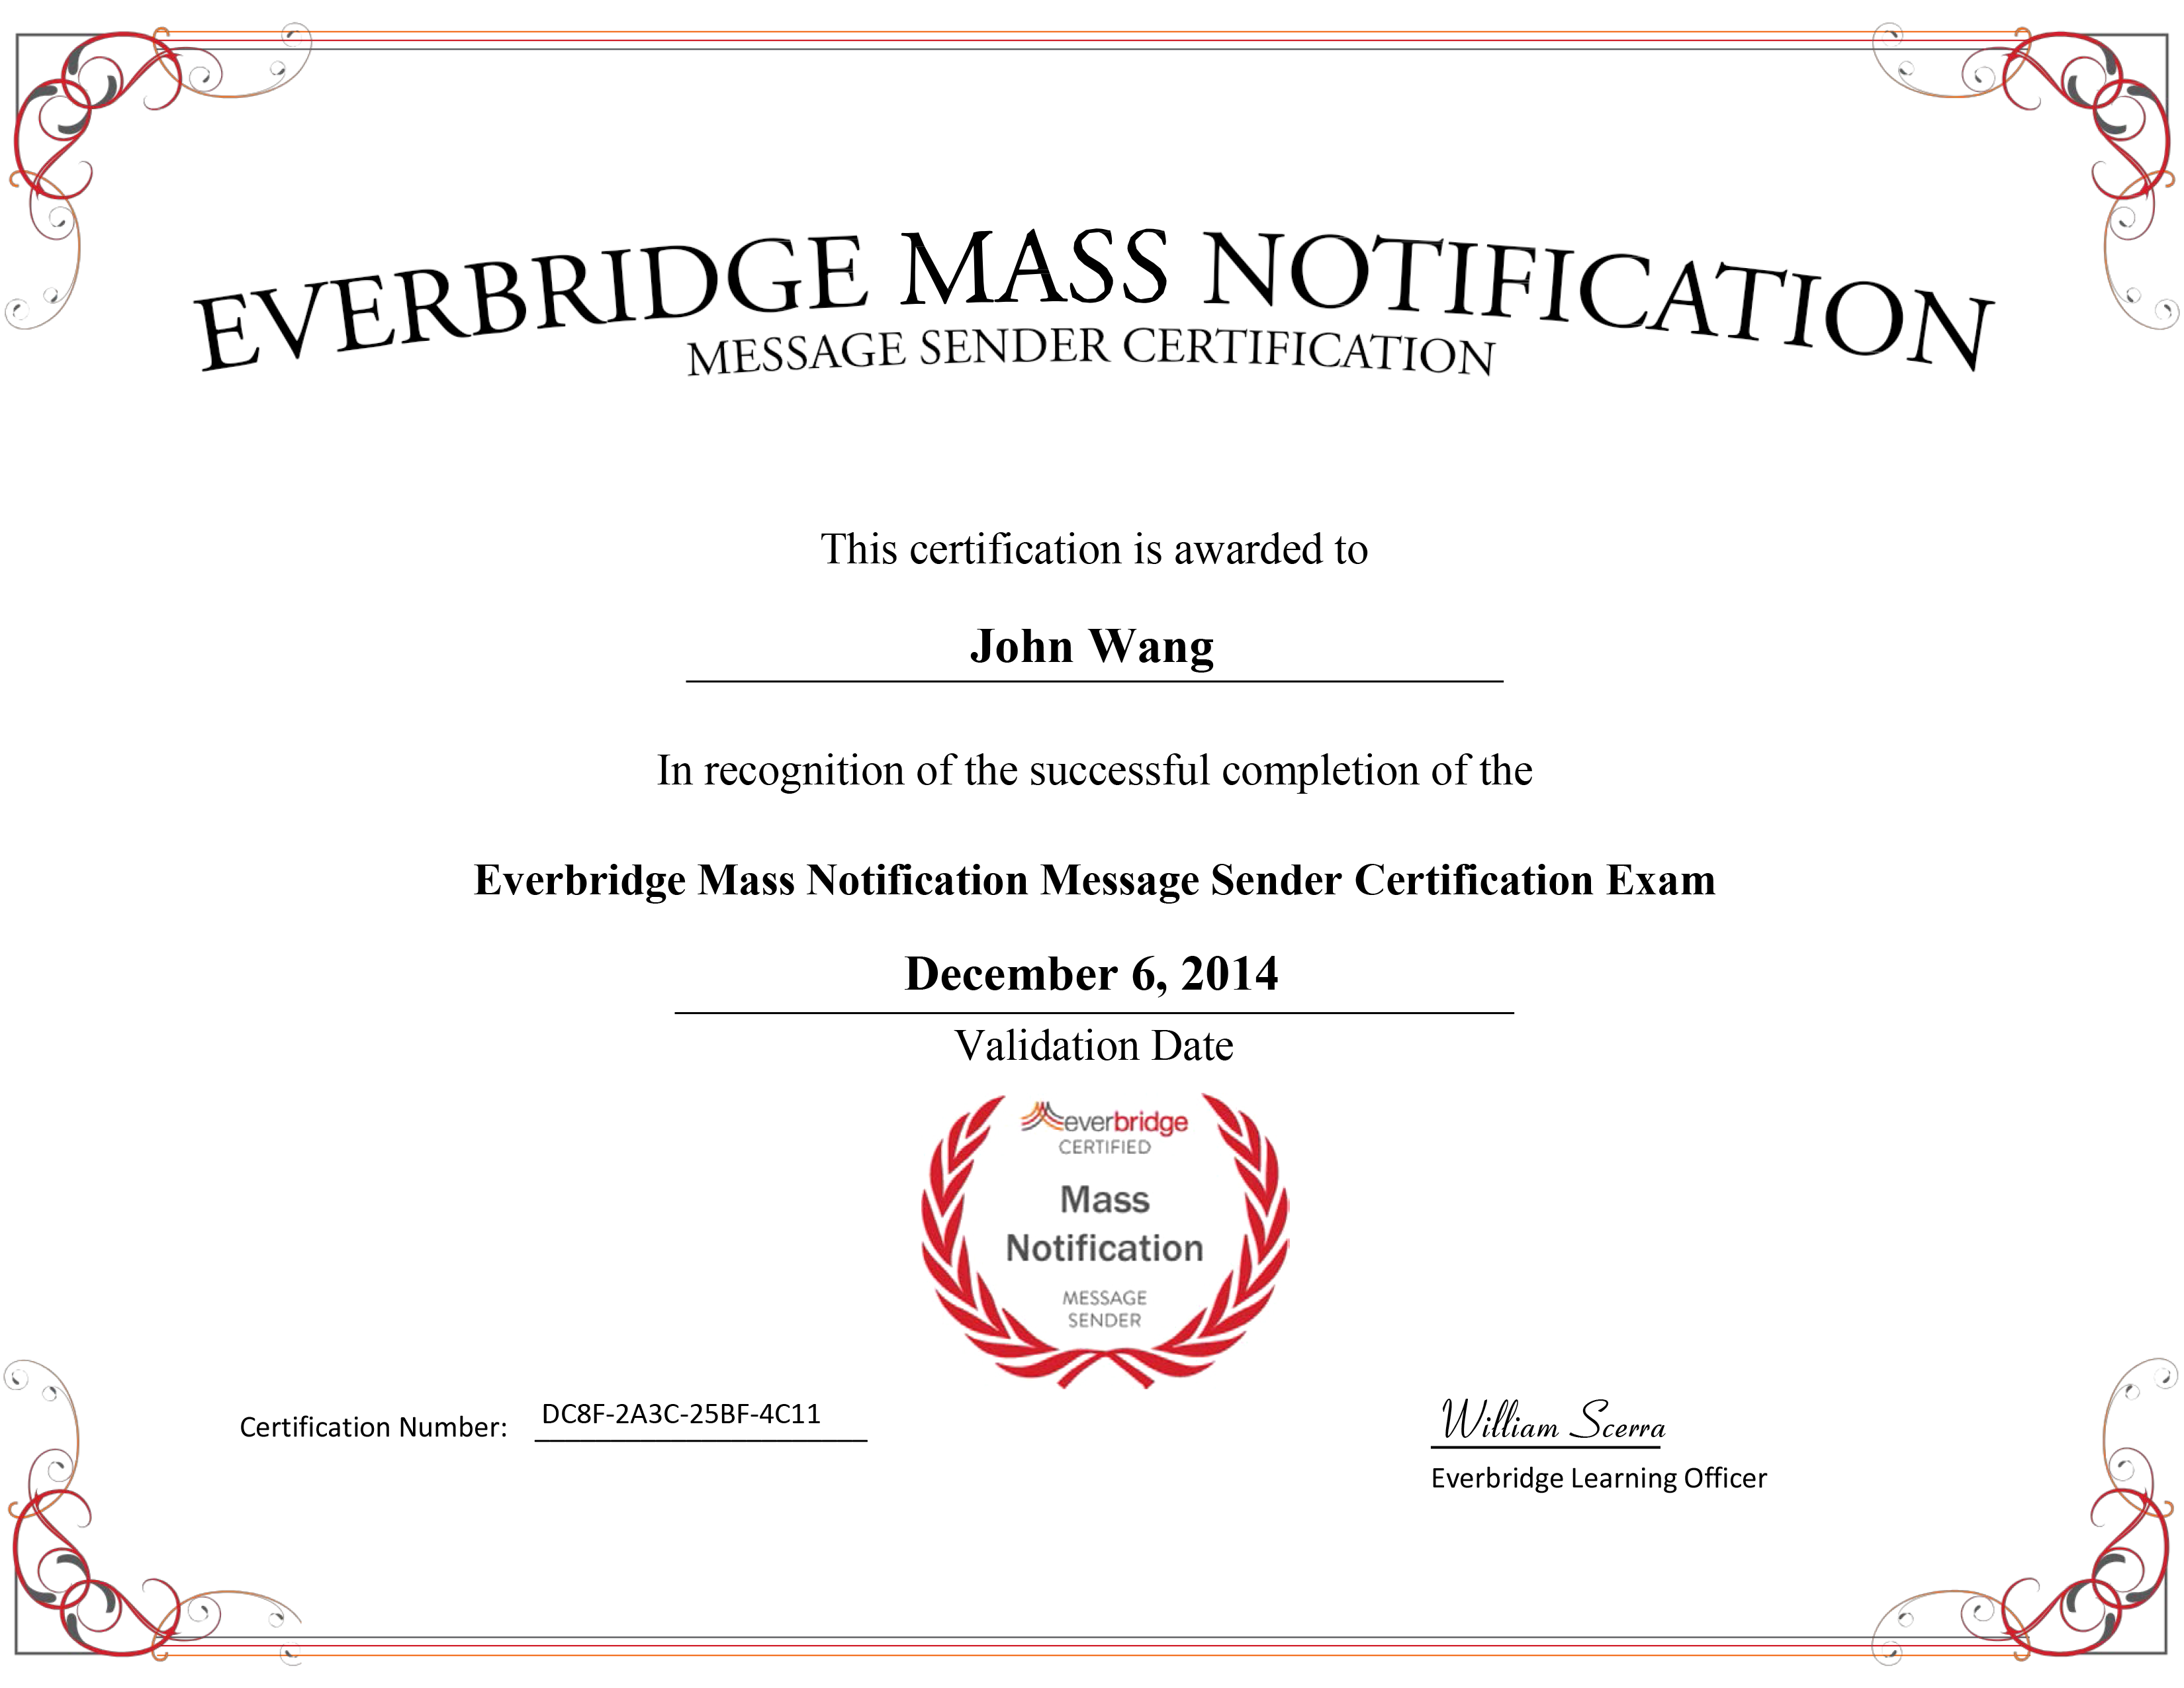 John's Everbridge Mass Notification Message Sender Certification from Everbridge